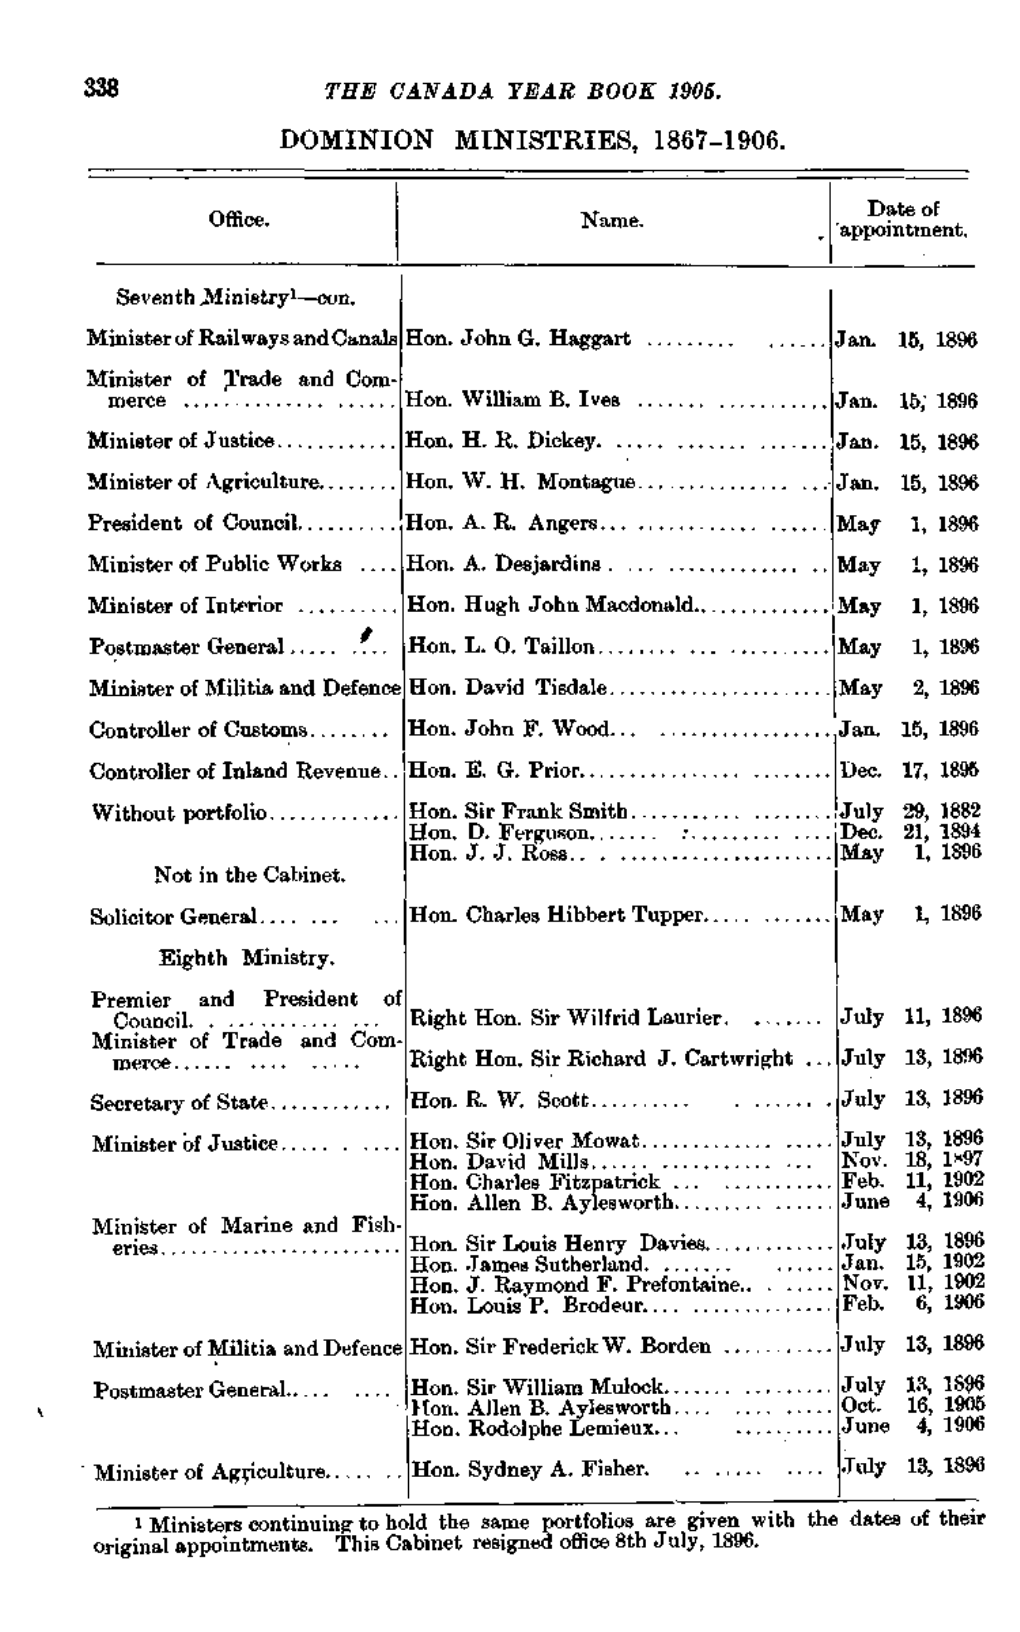 Dominion Ministries, 1867-1906